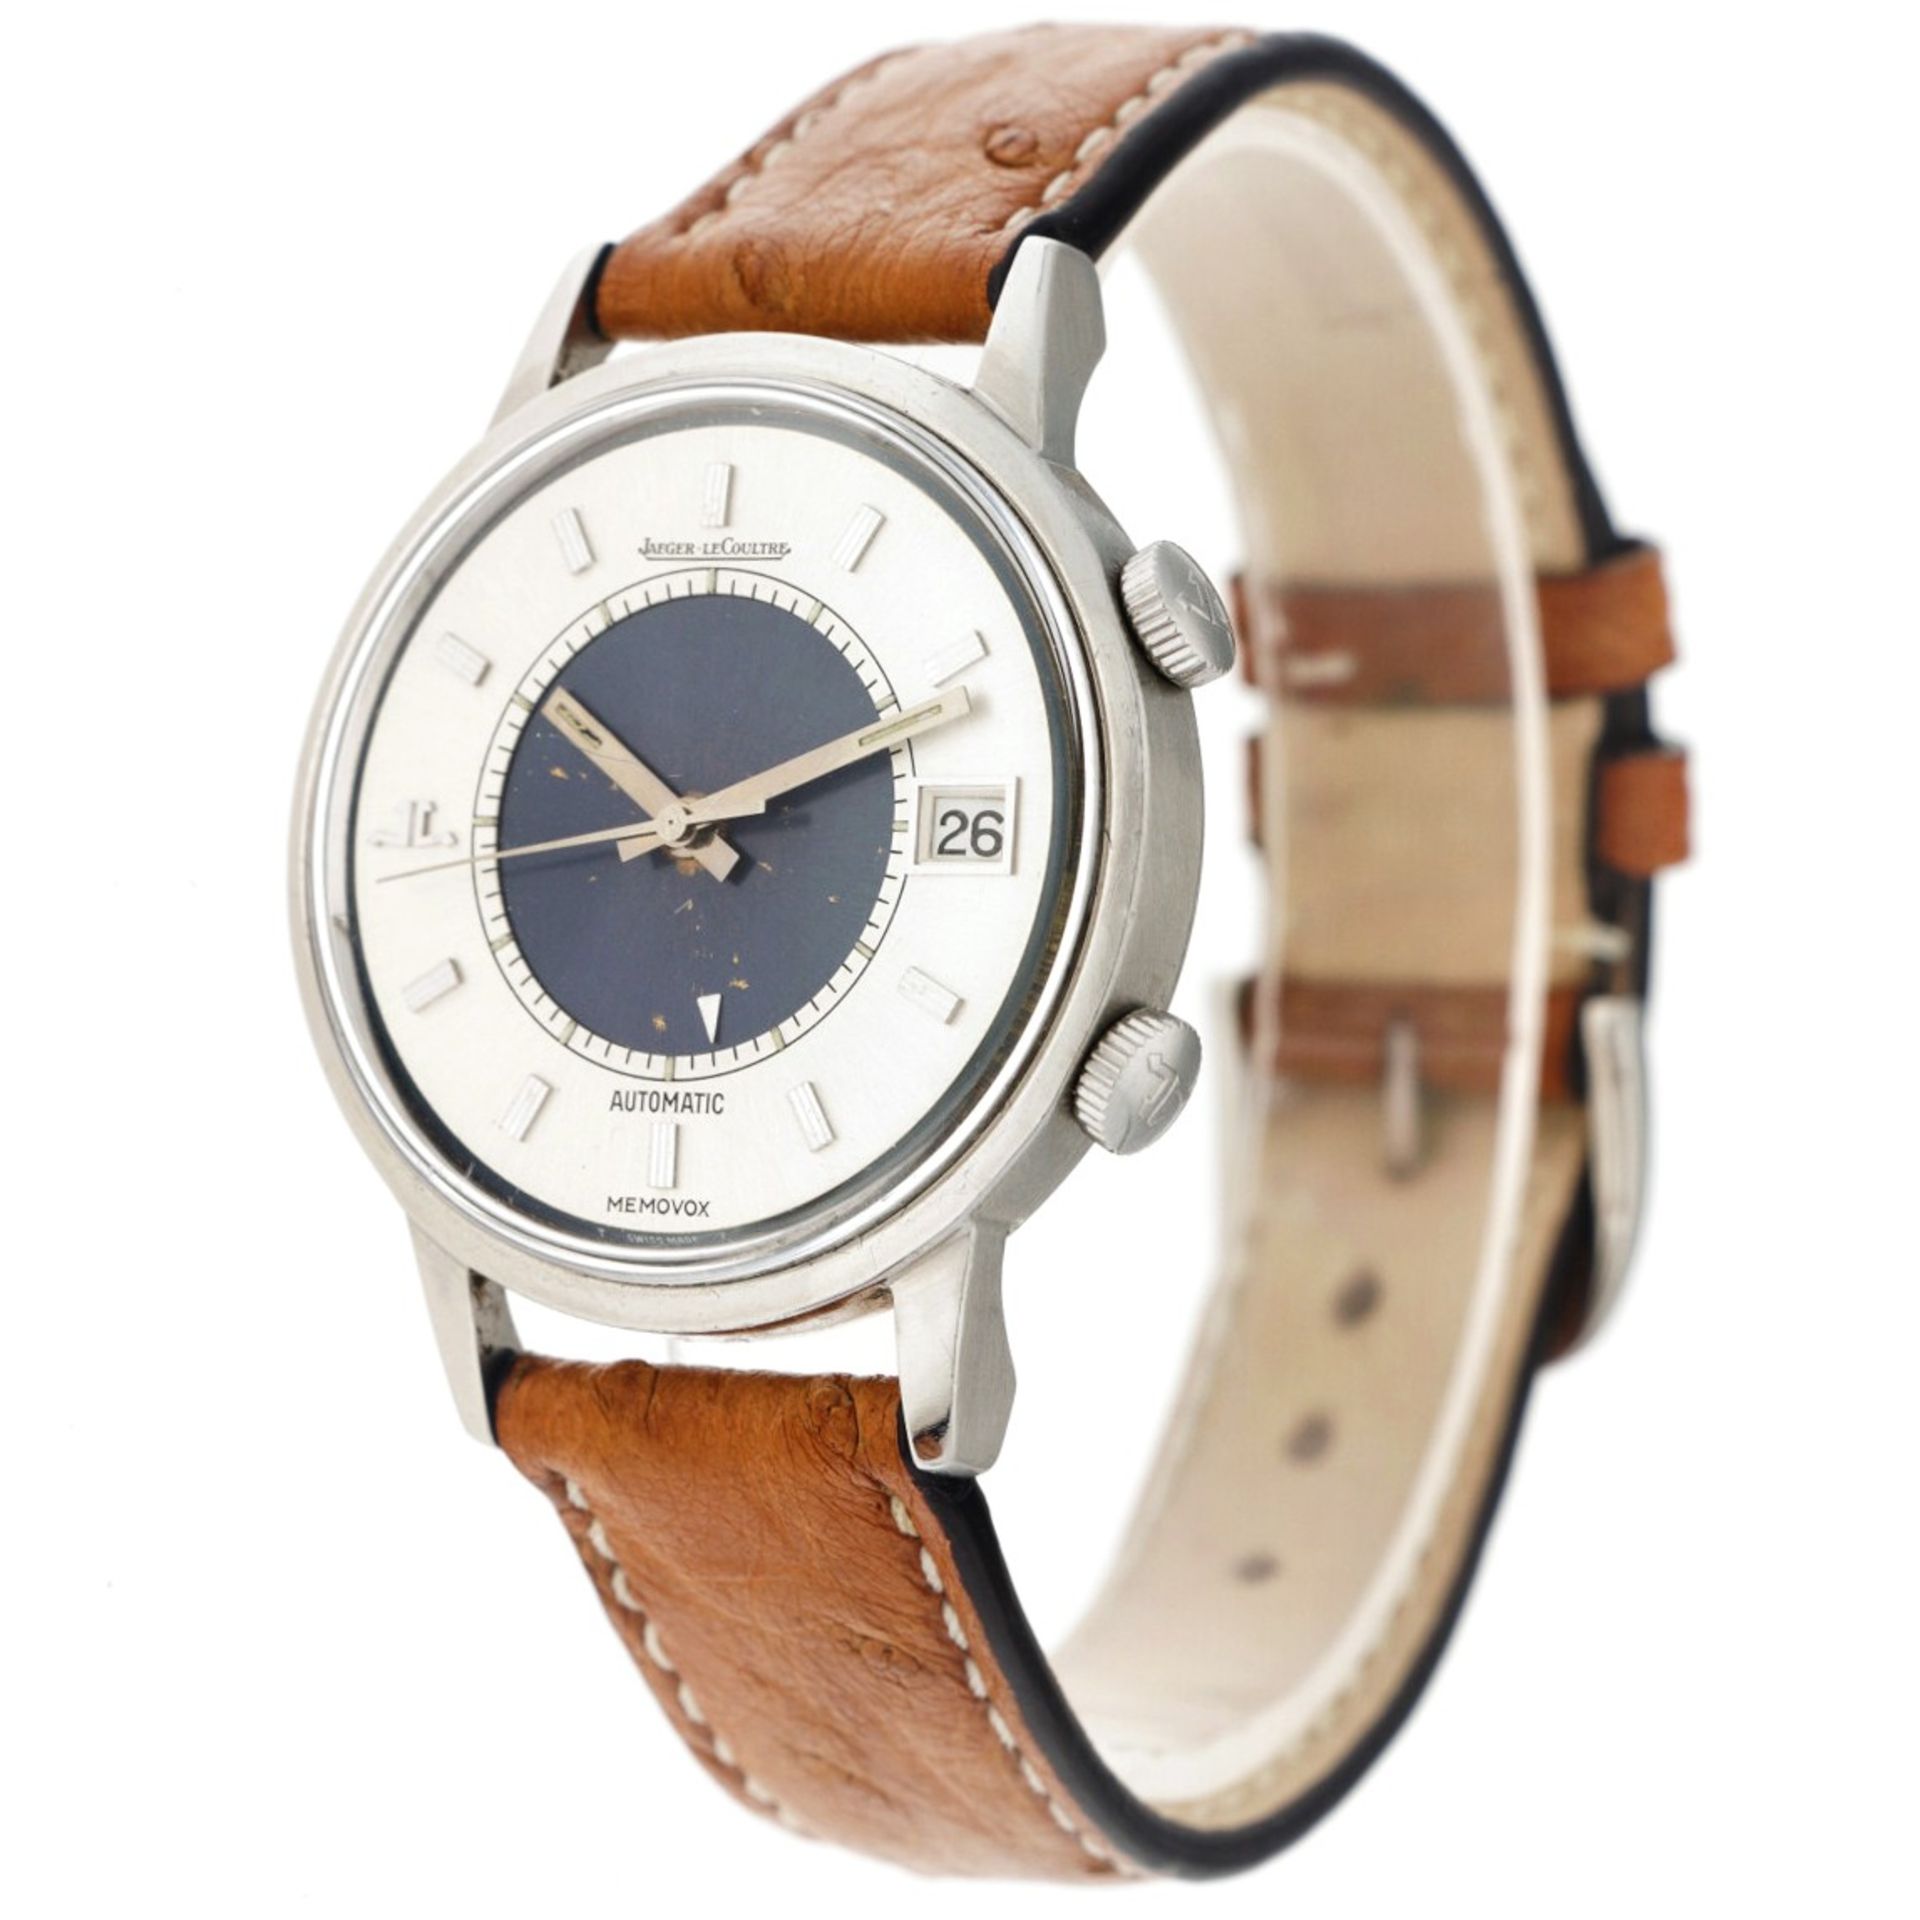 Jaeger-LeCoultre Memovox 875.42 Jumbo Cal. 916 Speedbeat - Men's watch - approx. 1970. - Image 2 of 9